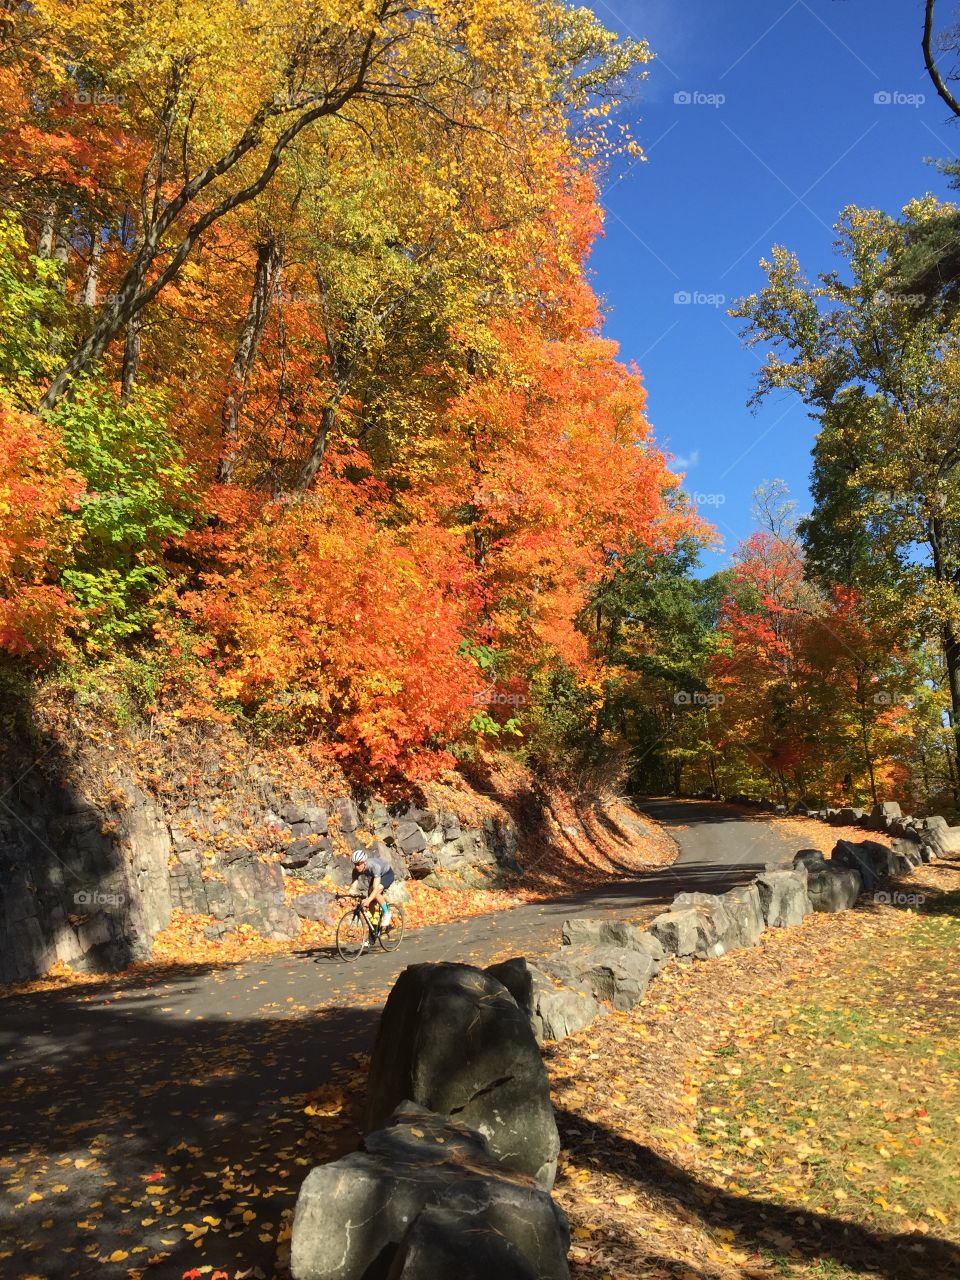 Fall colors bottom of Rangers Station Climb - Palisades Park, NJ